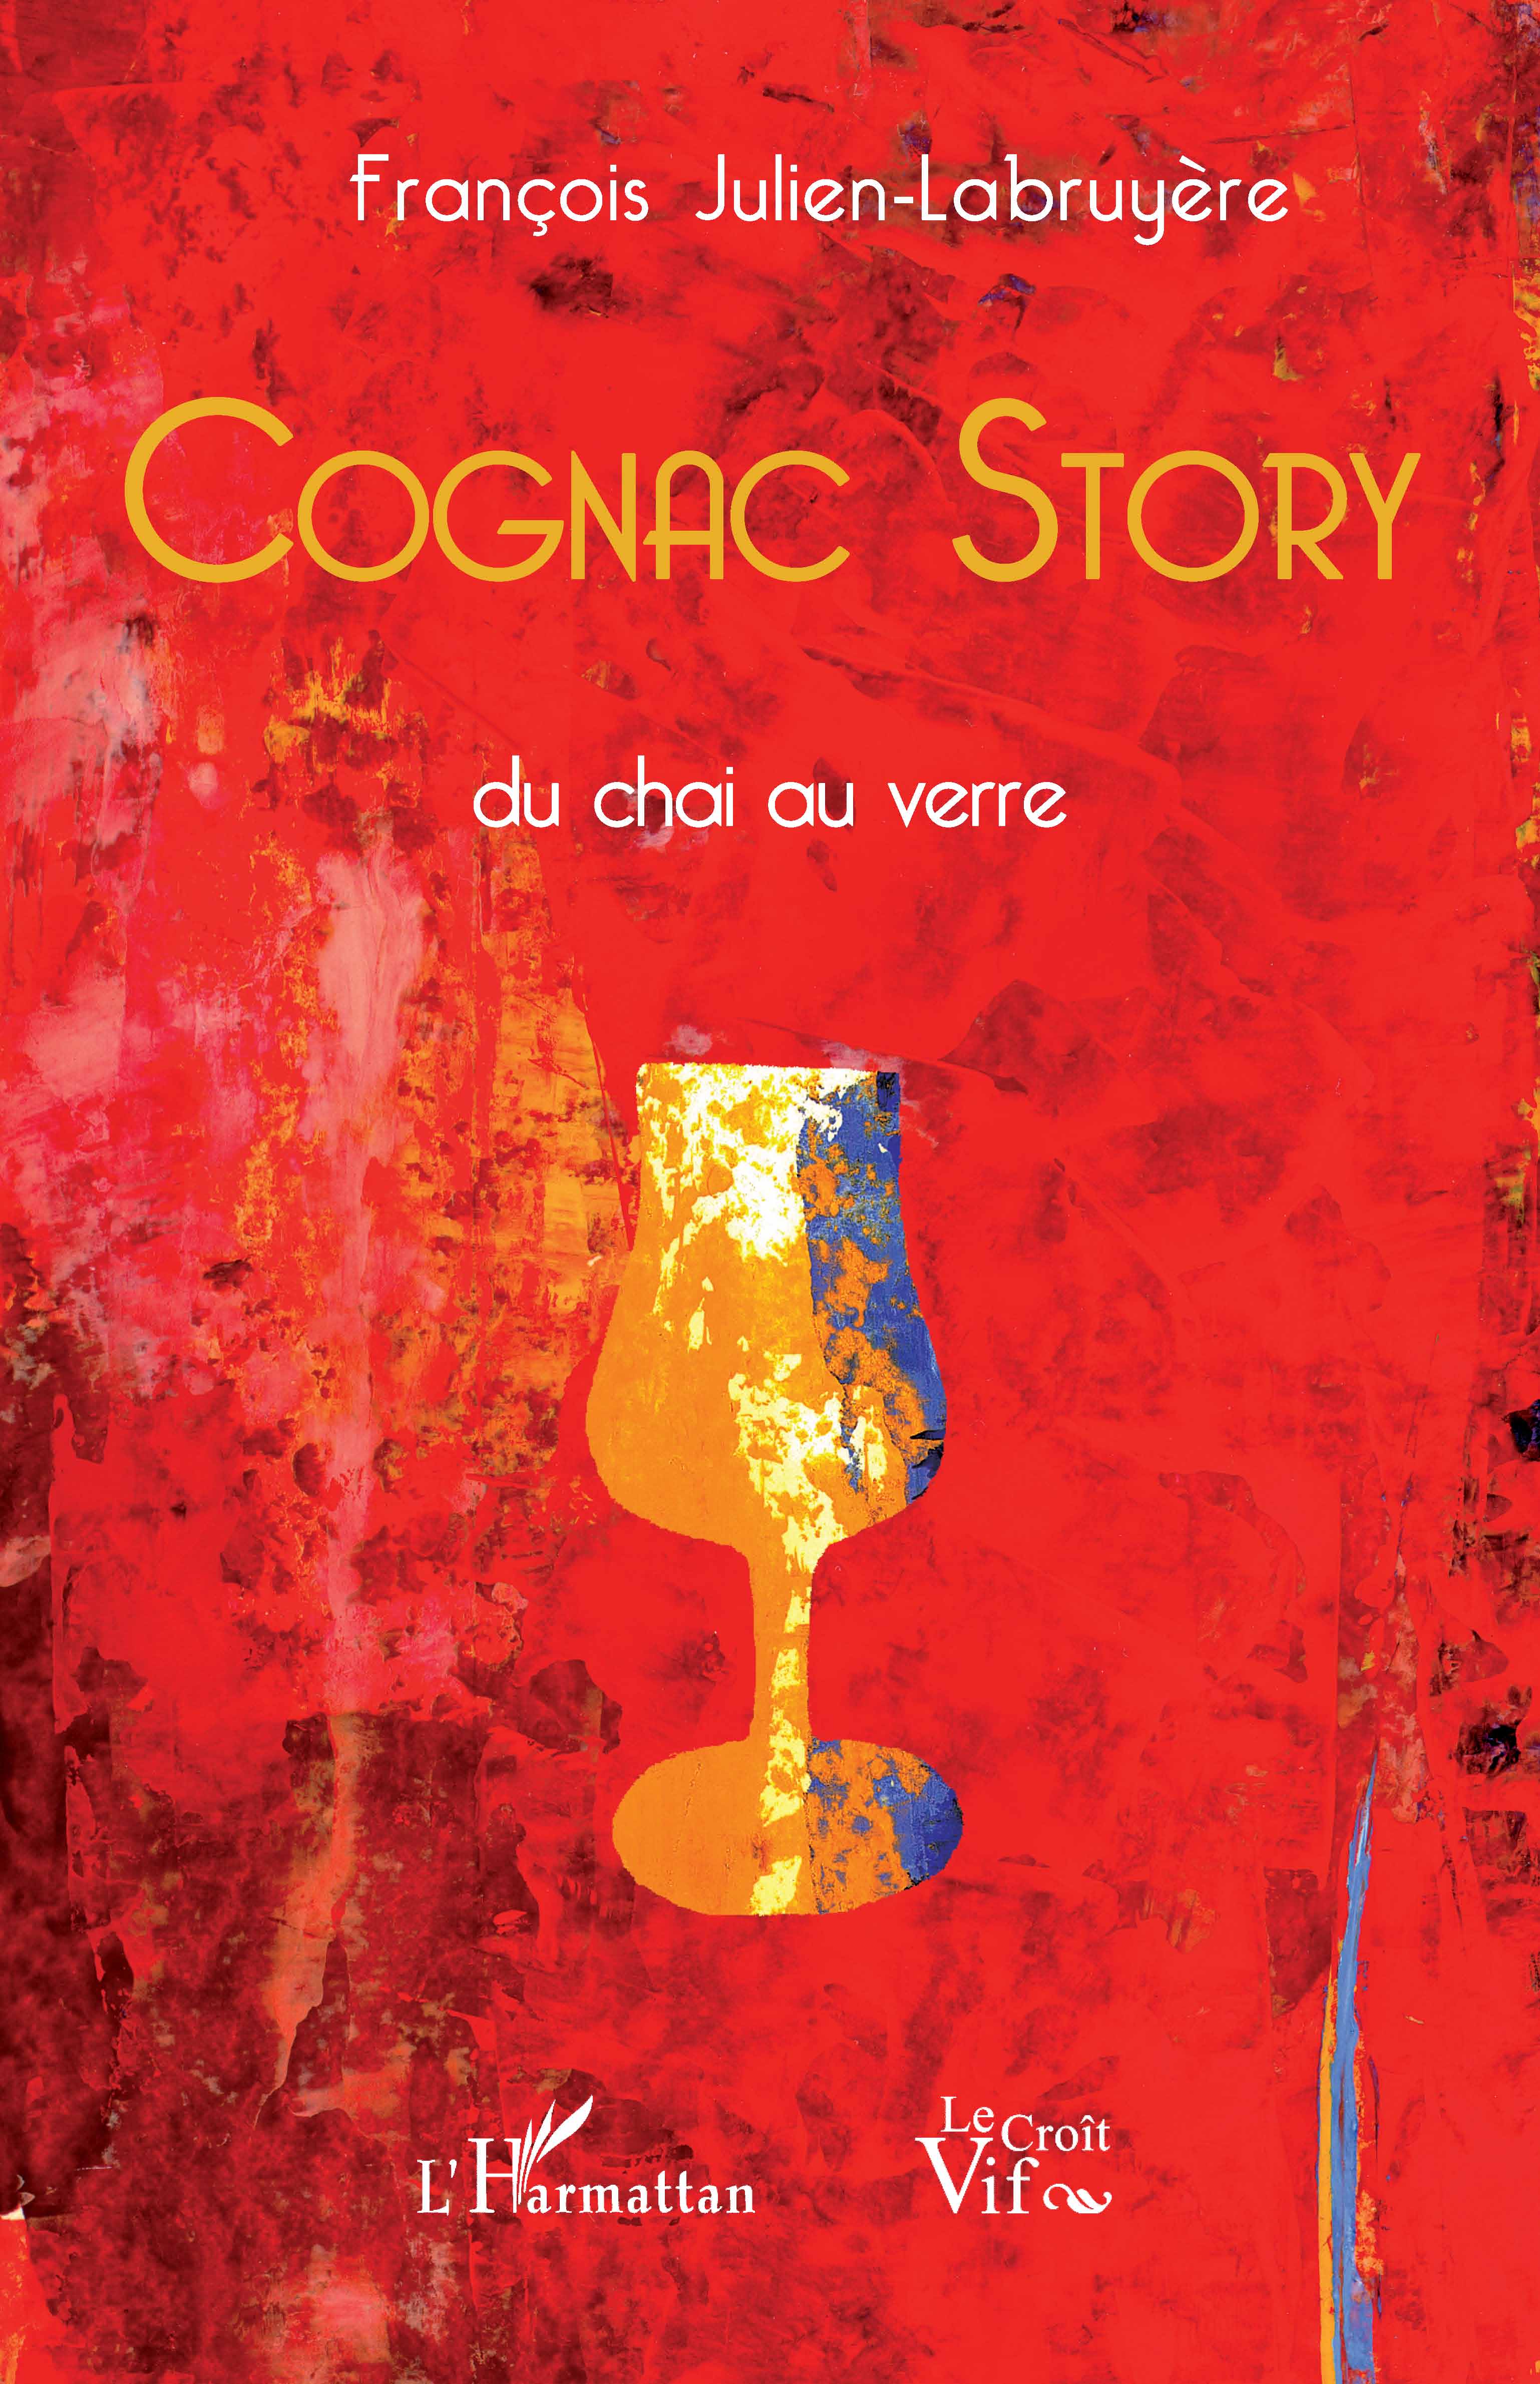 fjl-cognac-story_couv_basse_def